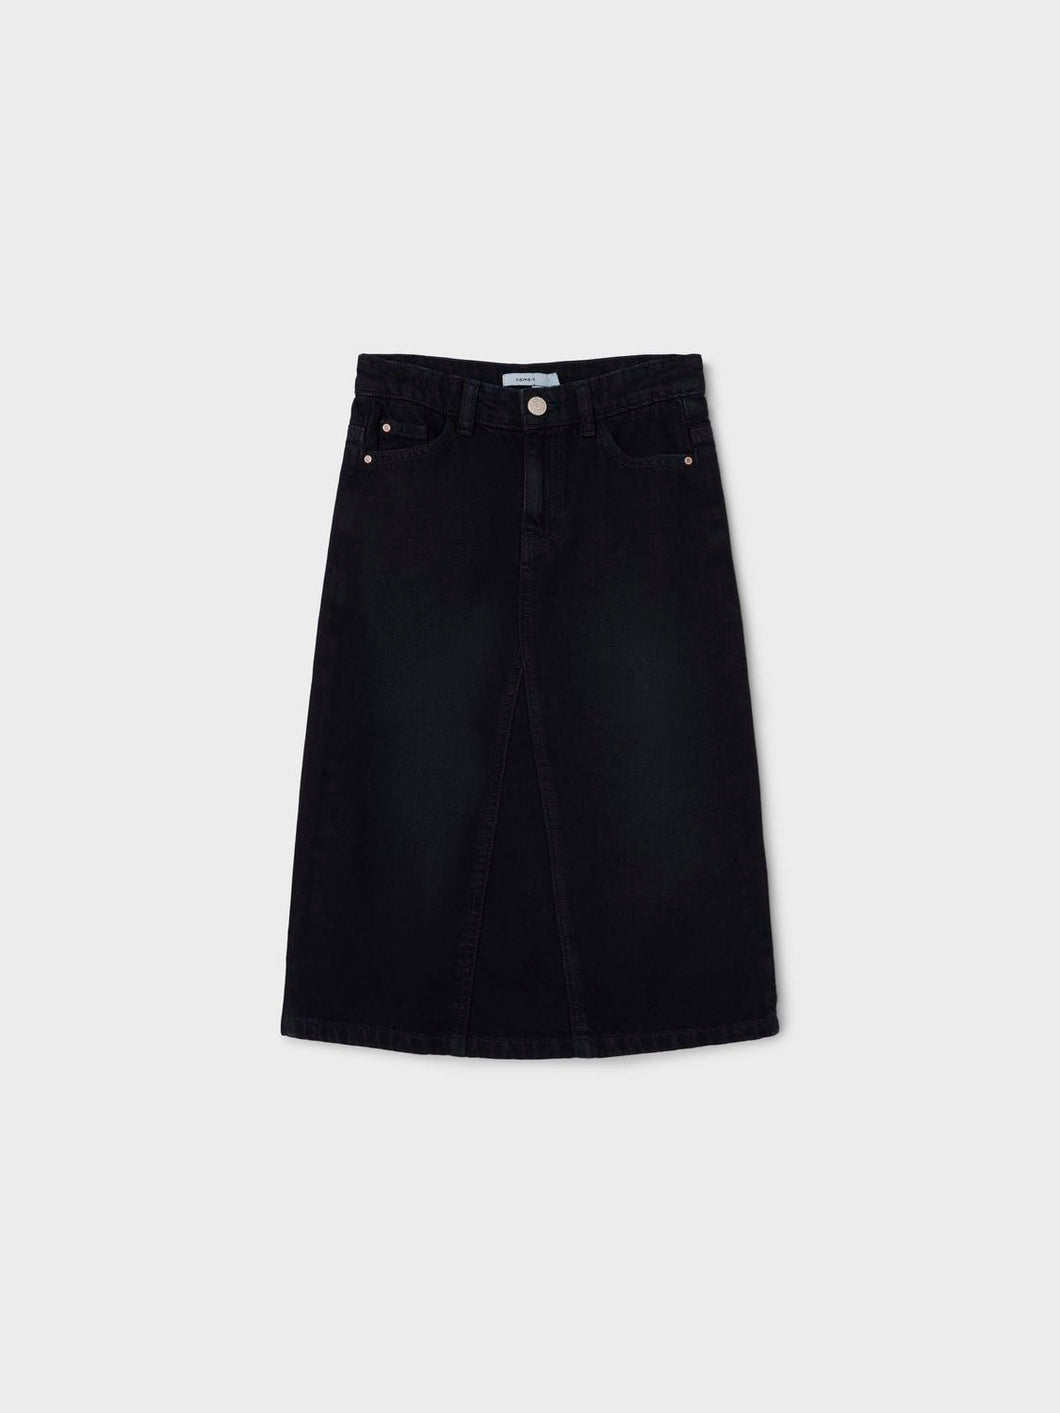 NKFLOUISE Skirts - Black Denim